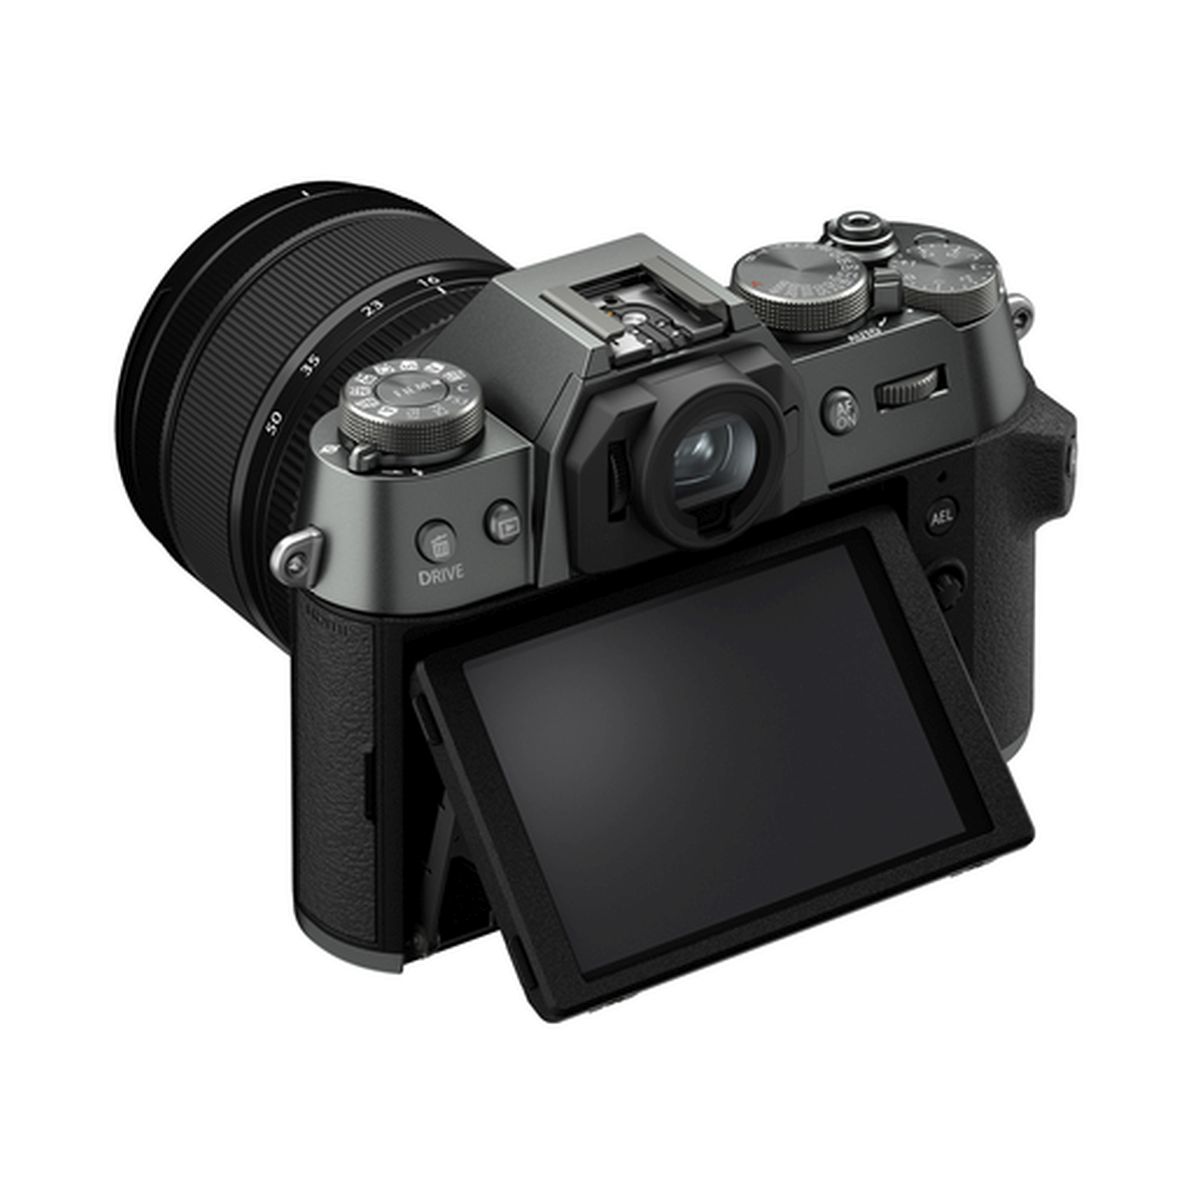 Fujifilm X-T50 Anthrazit + Fujifilm 16-50 mm 1:2,8-4,8 XF R LM WR